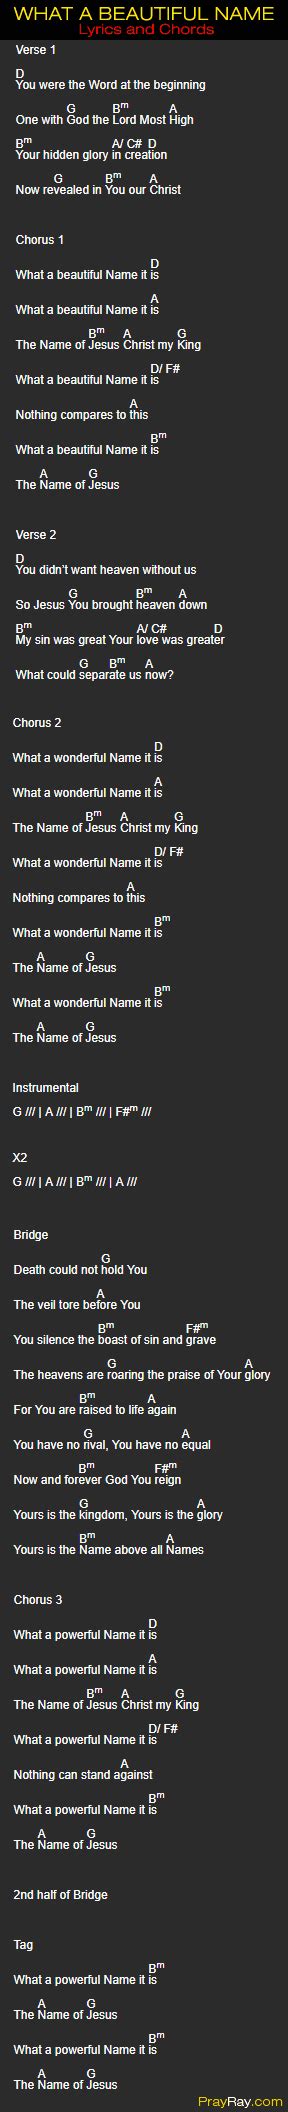 What a beautiful name lyrics by hillsong worship. HILLSONG WORSHIP SONG - WHAT A BEAUTIFUL NAME Chords, Lyrics